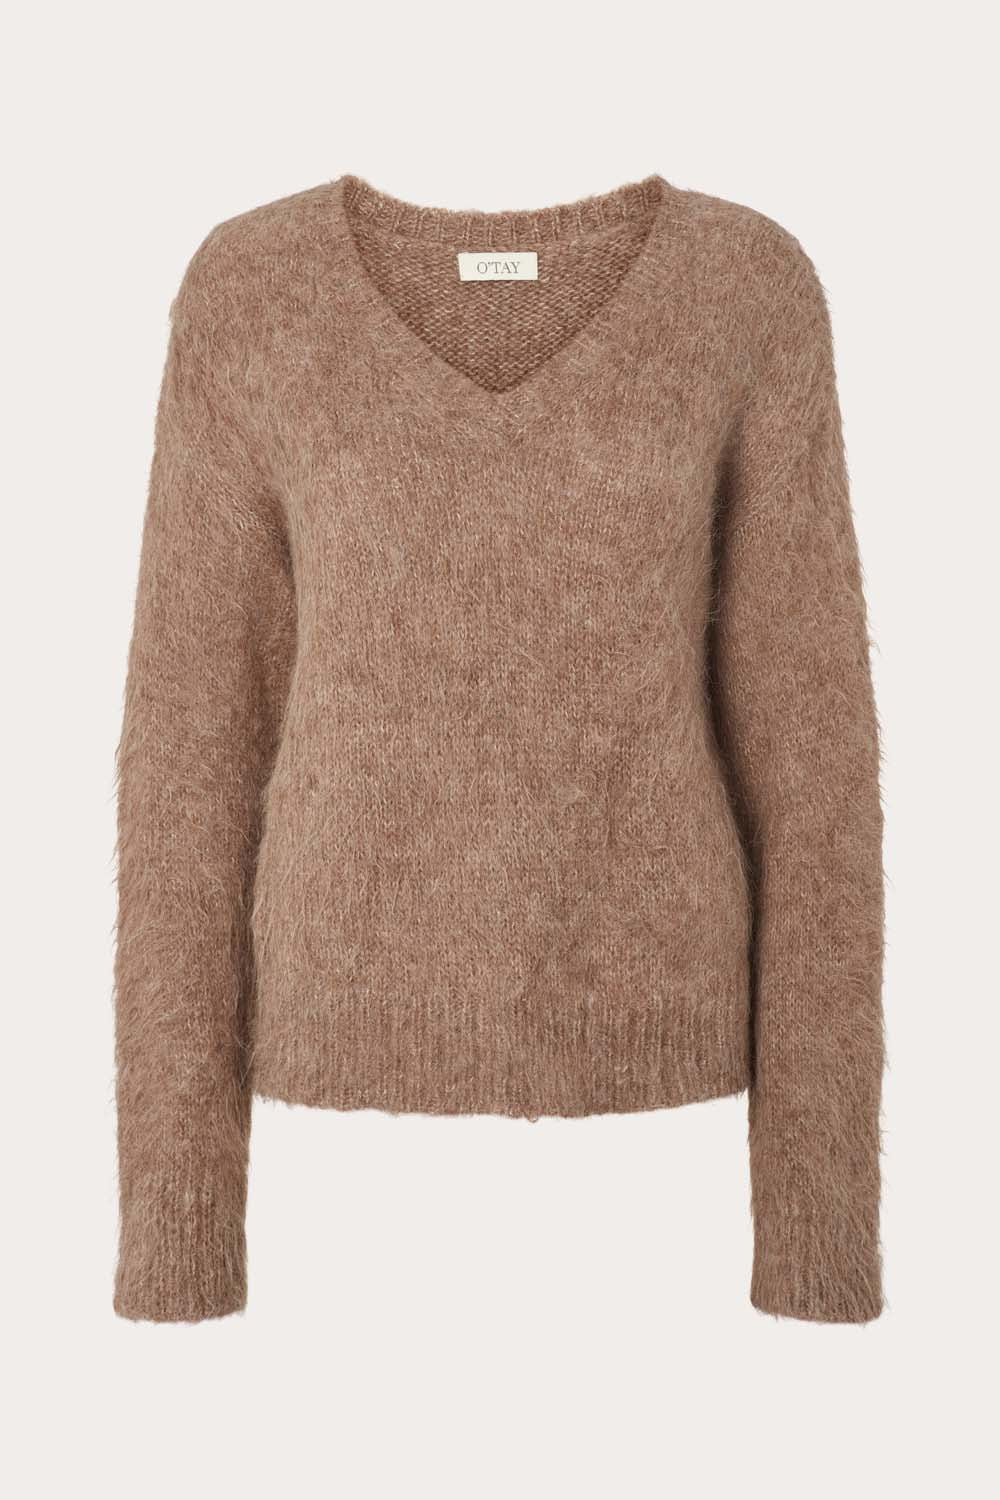 O'TAY Esmeralda Sweater Blouses Alpaca Brown